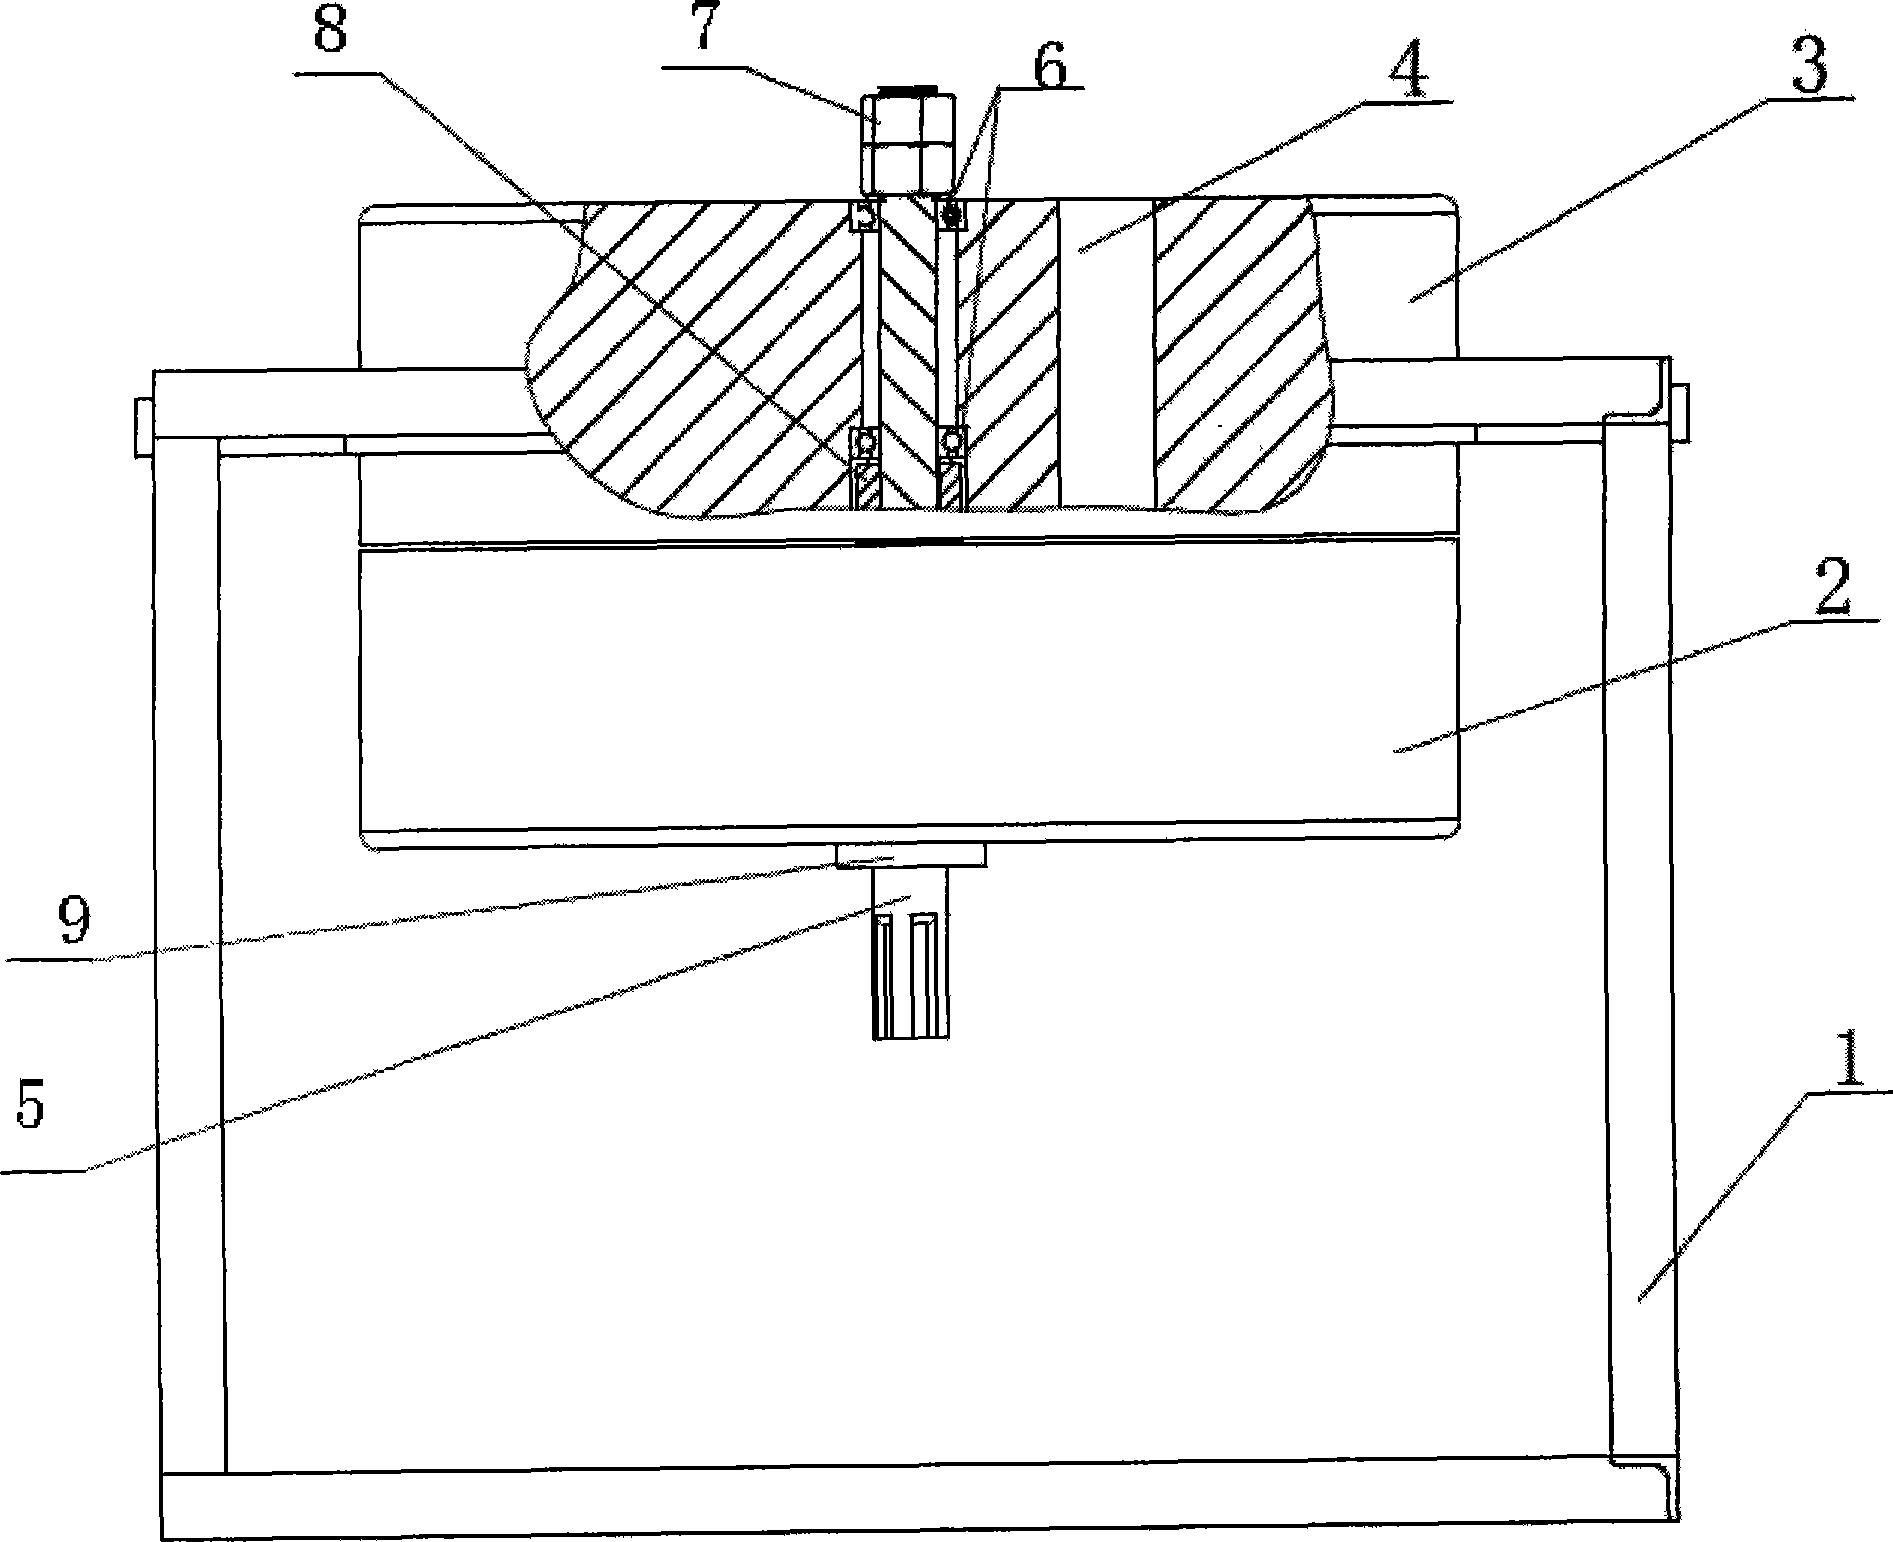 Vertical mechanical stone mill